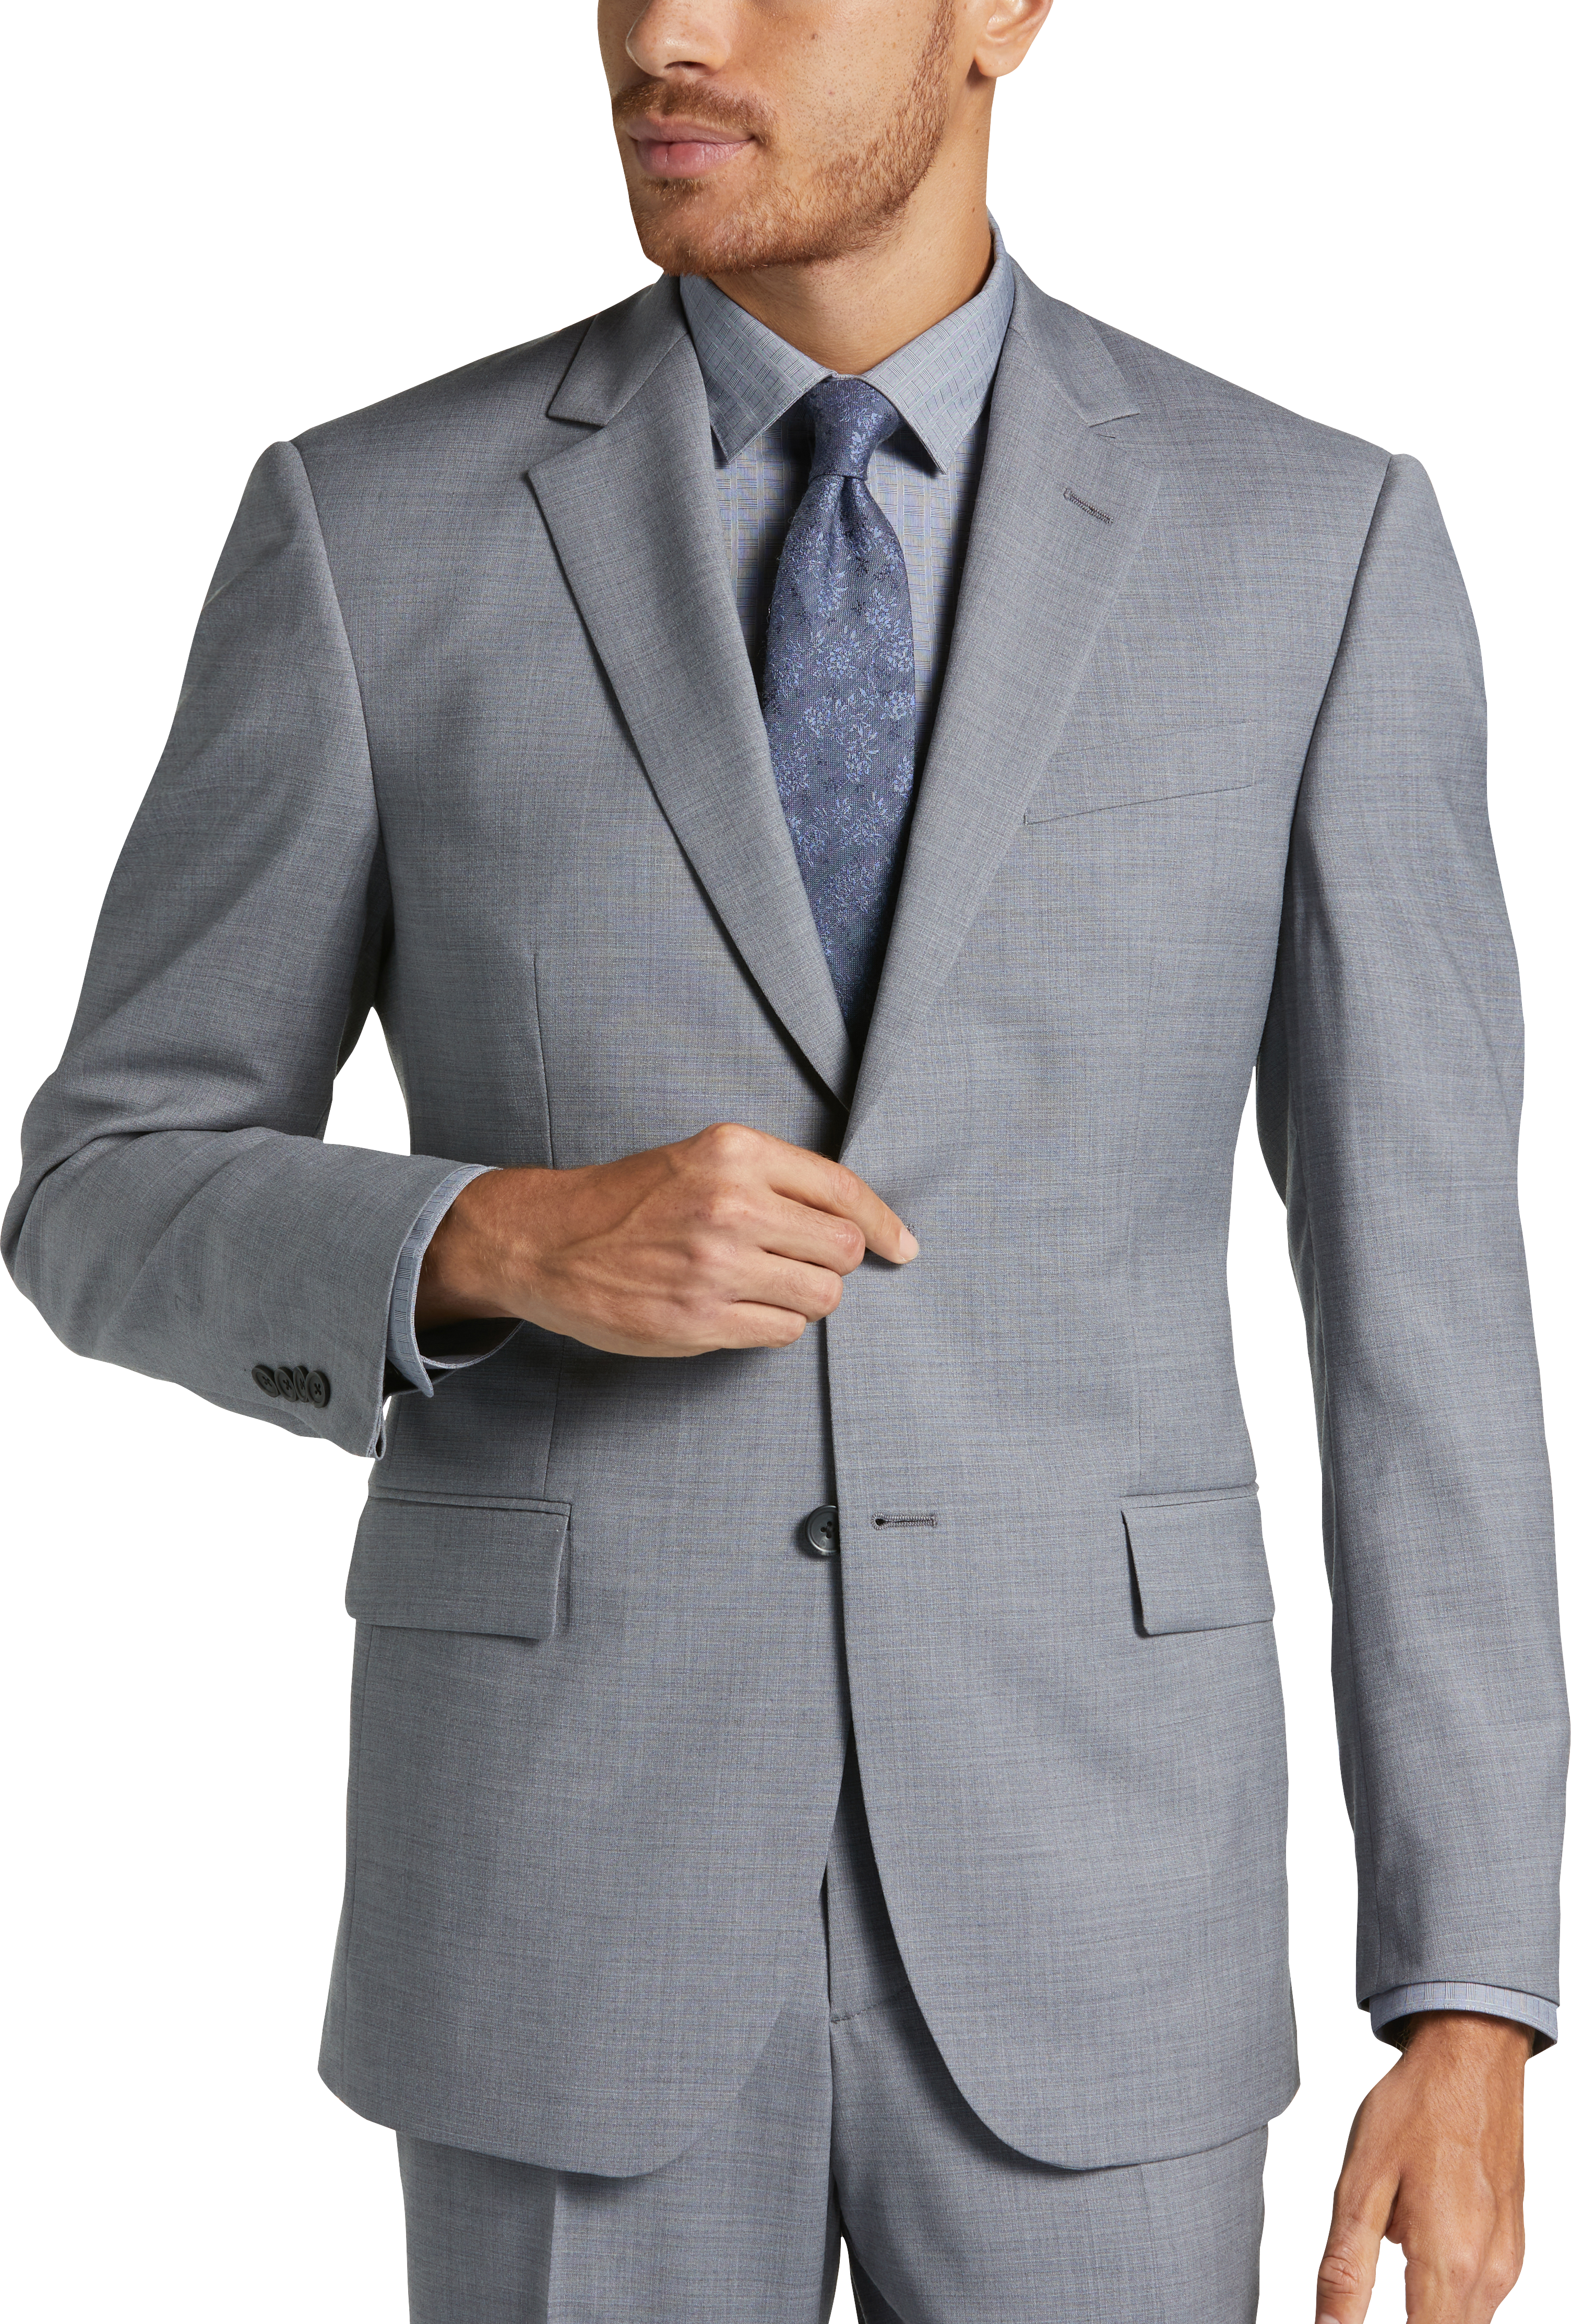 Pronto Uomo Modern Fit Suit, Gray - Men's Sale | Men's Wearhouse